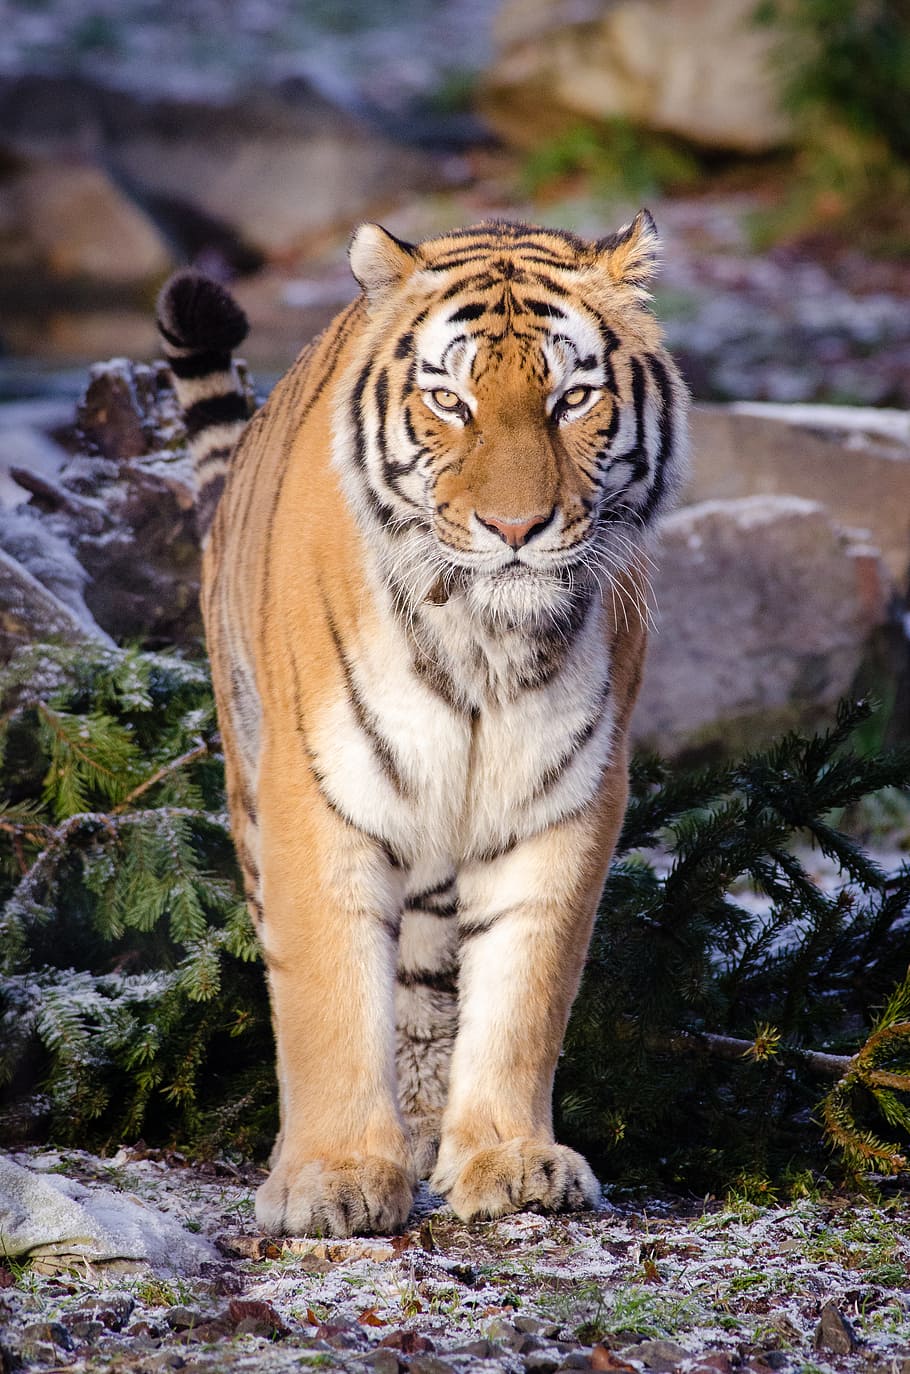 Tigre siberiano, tigre laranja e branco, temas animais, animal, mamífero, felino, animais selvagens, gato grande, tigre, animais em estado selvagem